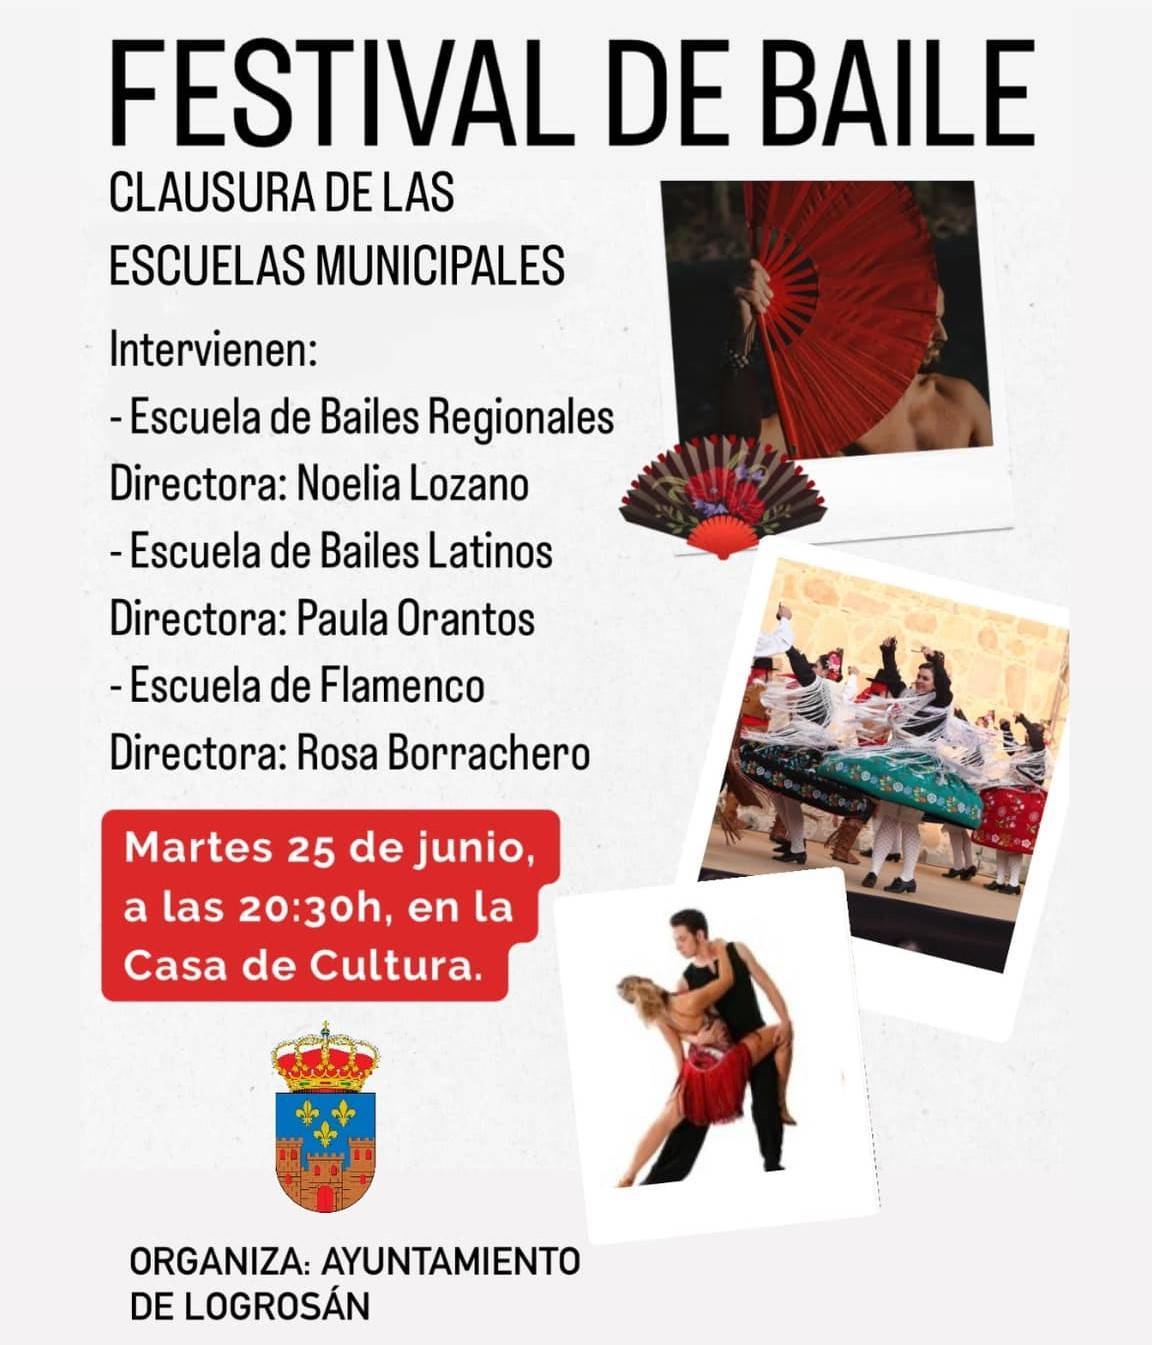 Festival de baile clausura de las escuelas municipales (2024) - Logrosán (Cáceres)